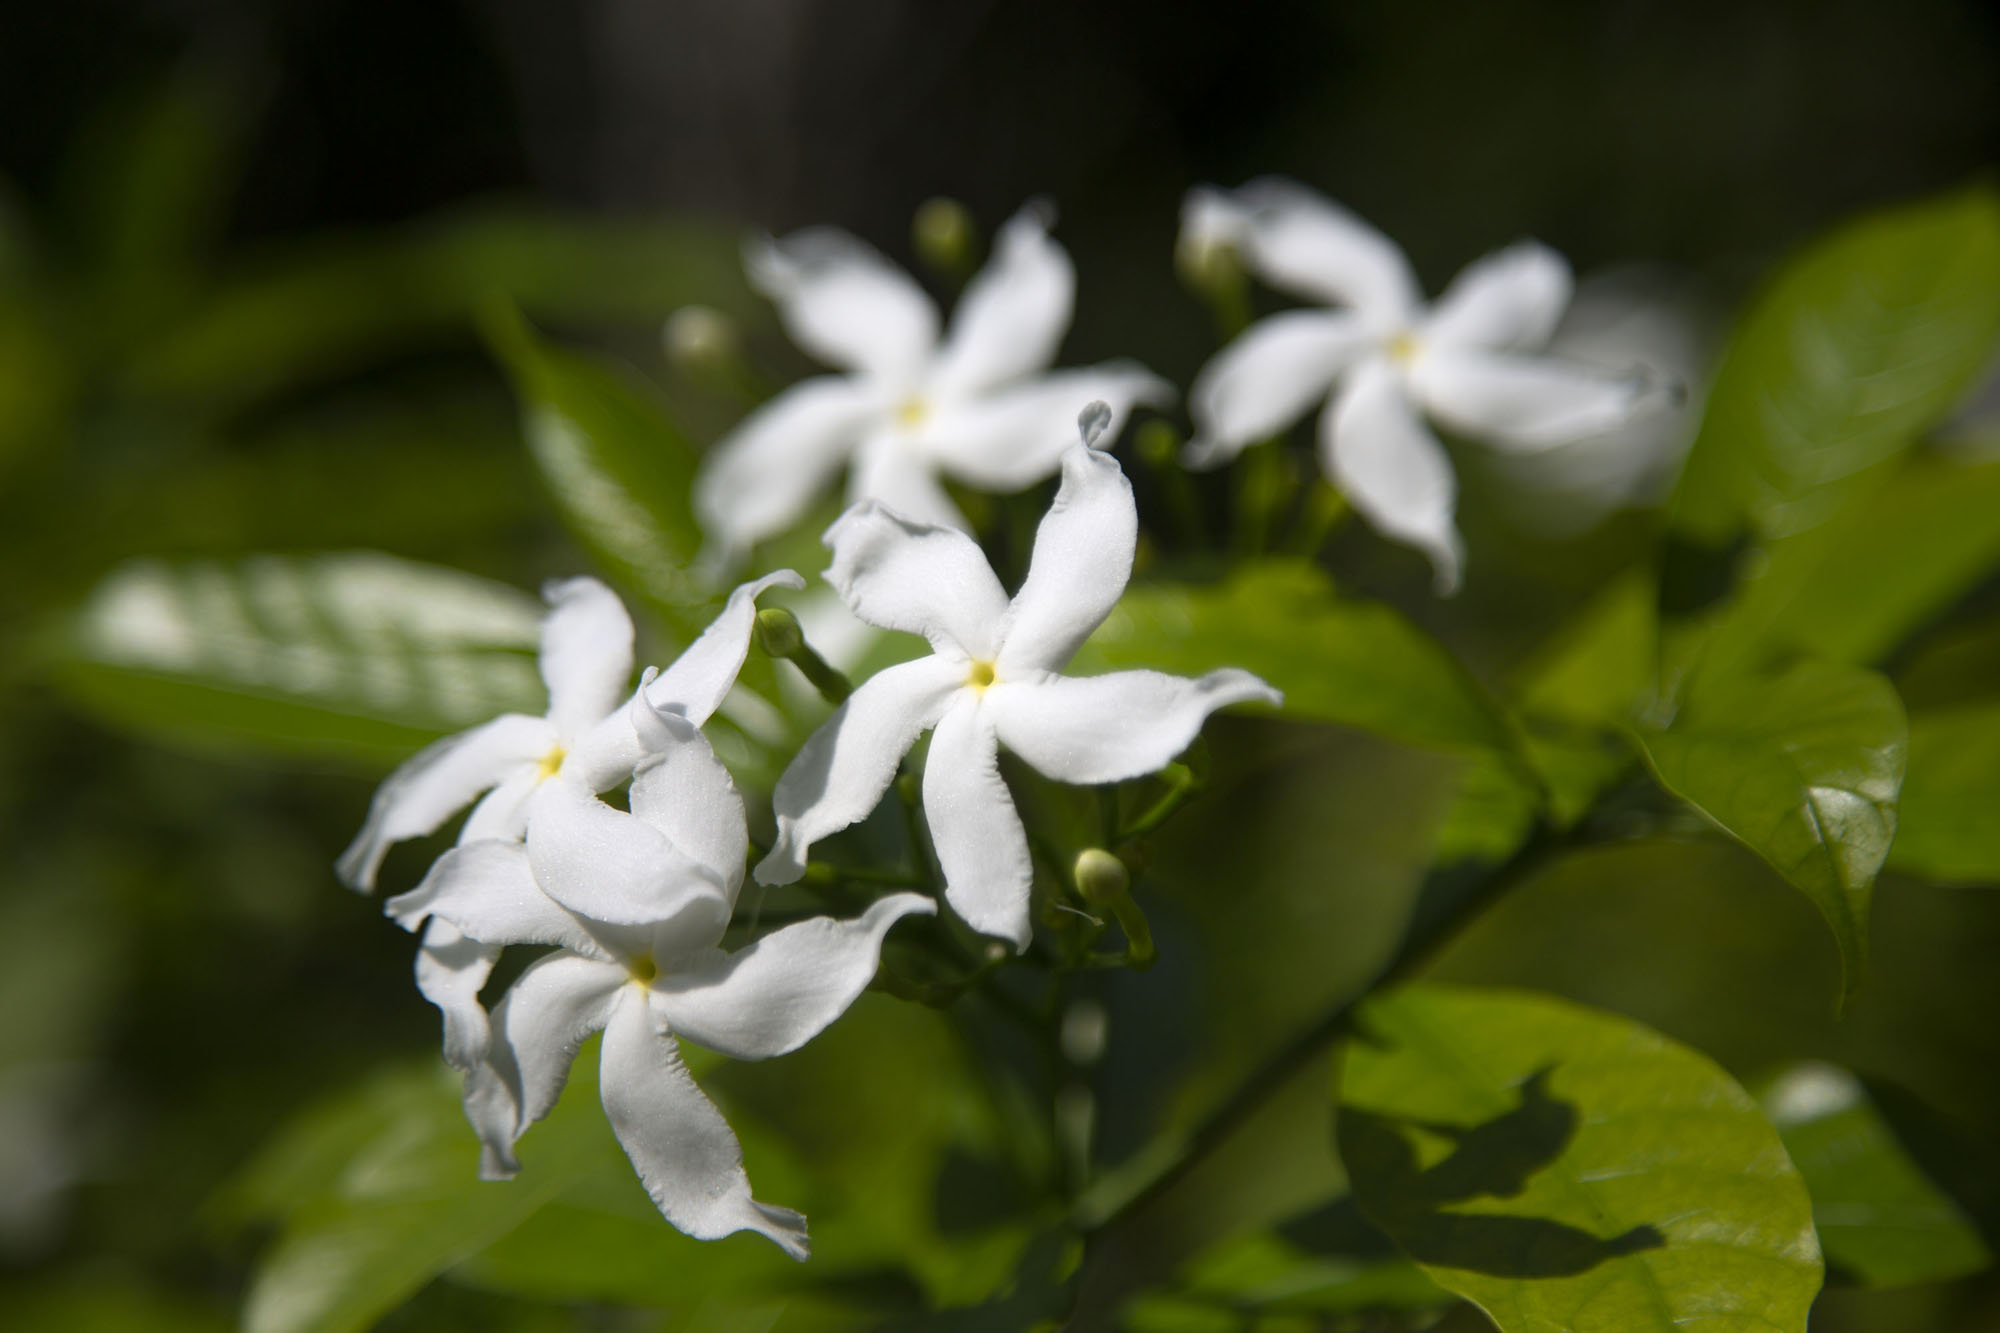 Picture of Singapore Botanic Gardens (Singapore): White milkwood pinwheel flowers are commonly seen in the botanic gardens